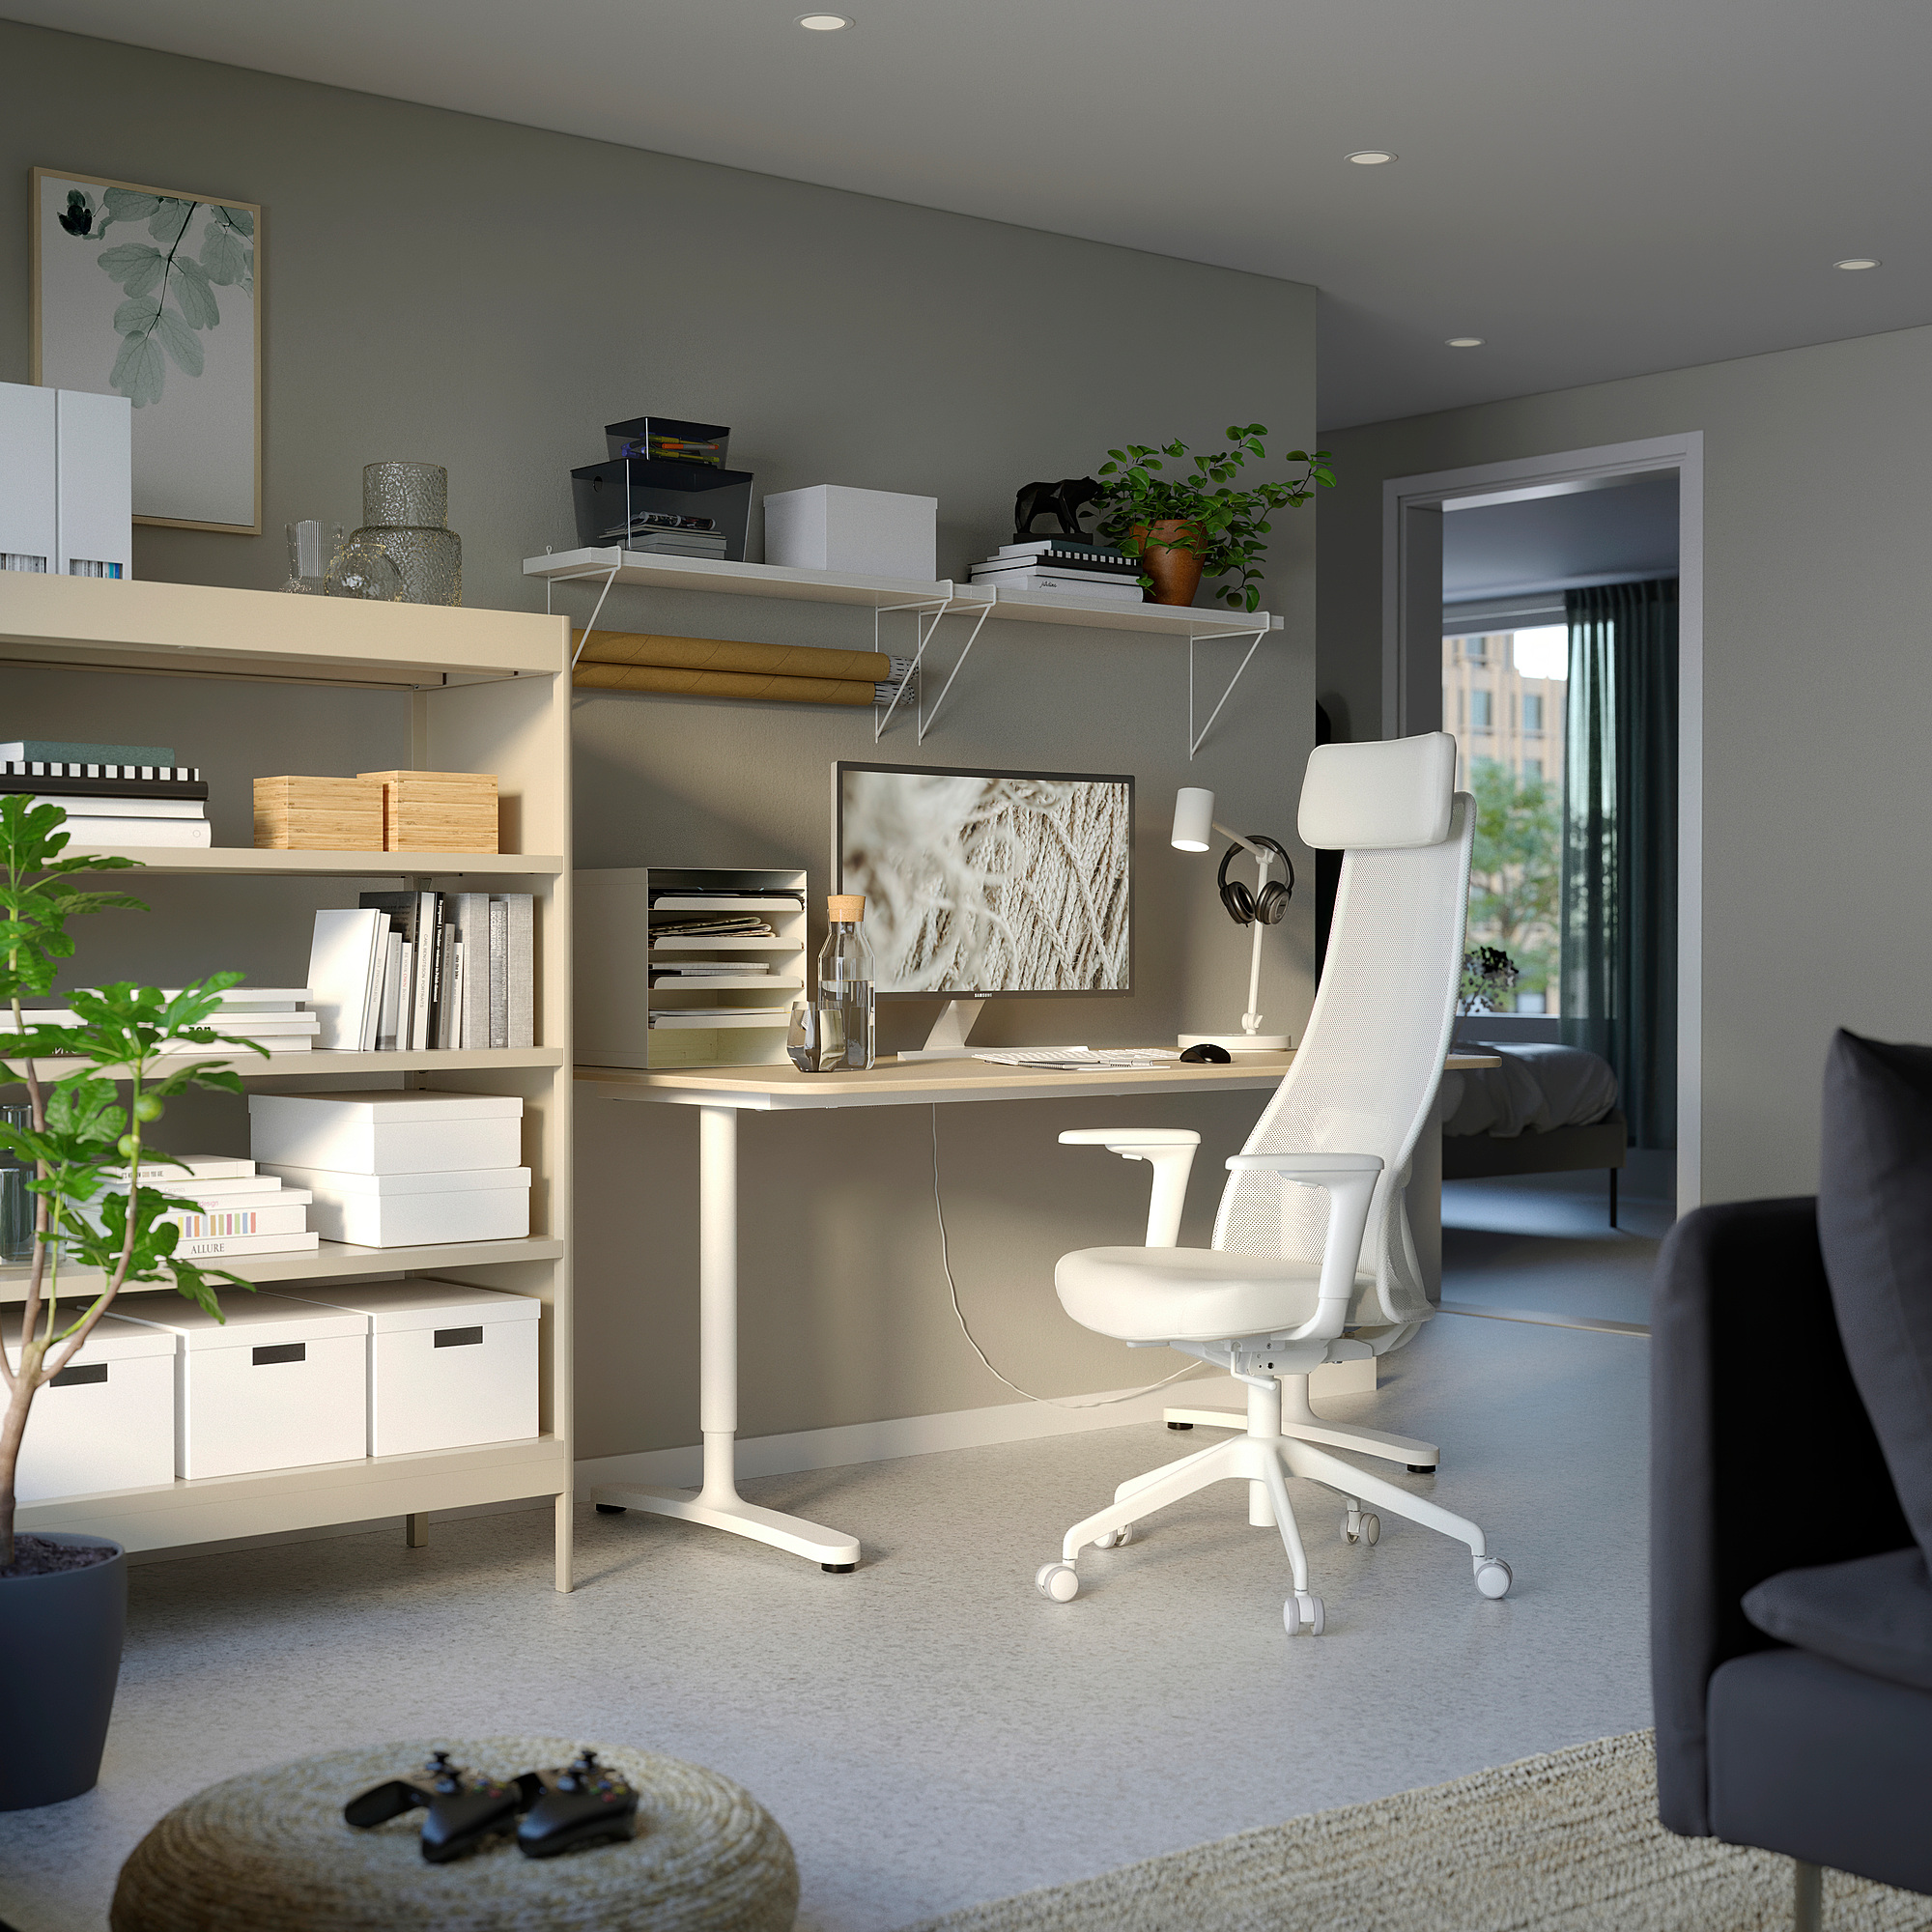 JÄRVFJÄLLET office chair with armrests